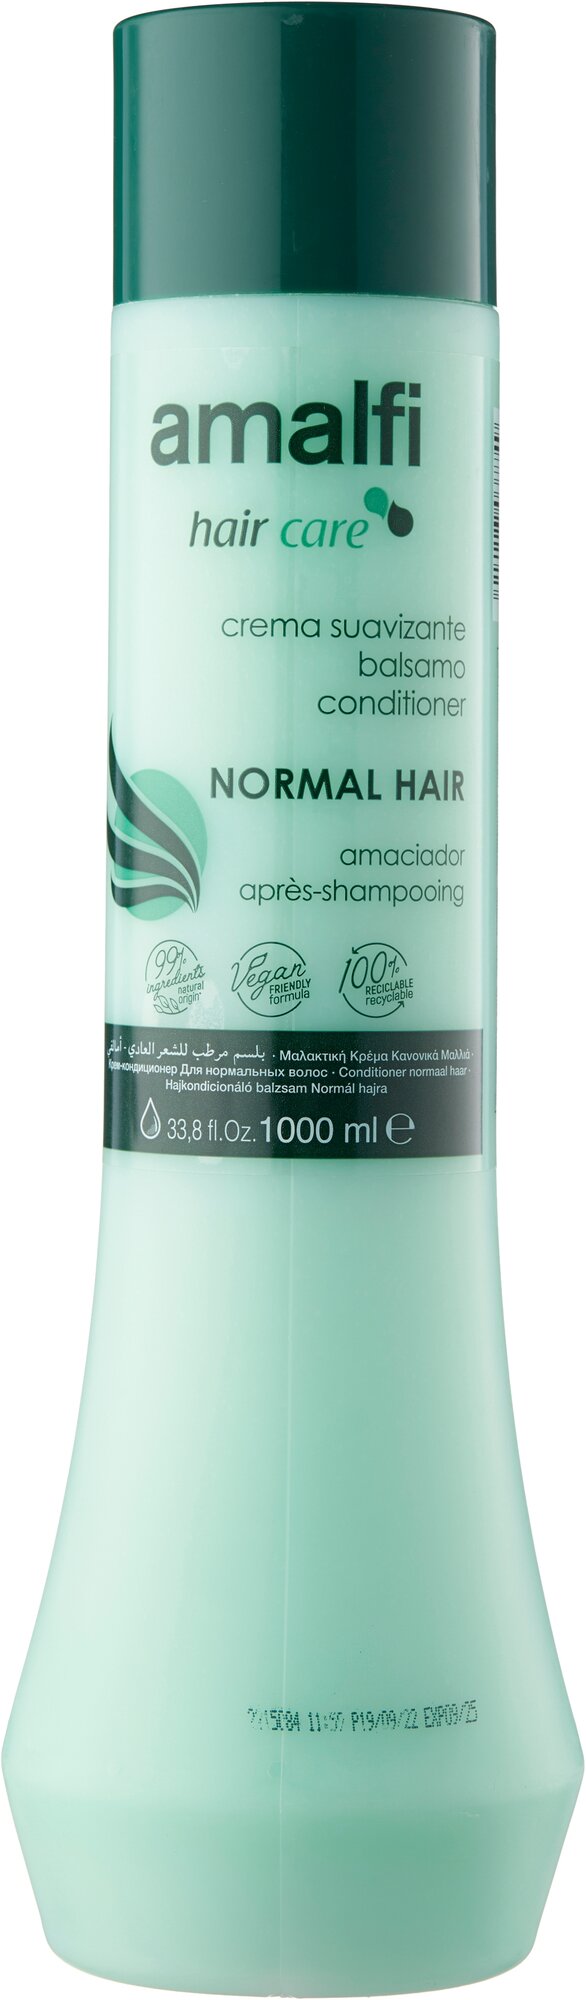 Amalfi кондиционер для волос Normal hair, 1000 мл